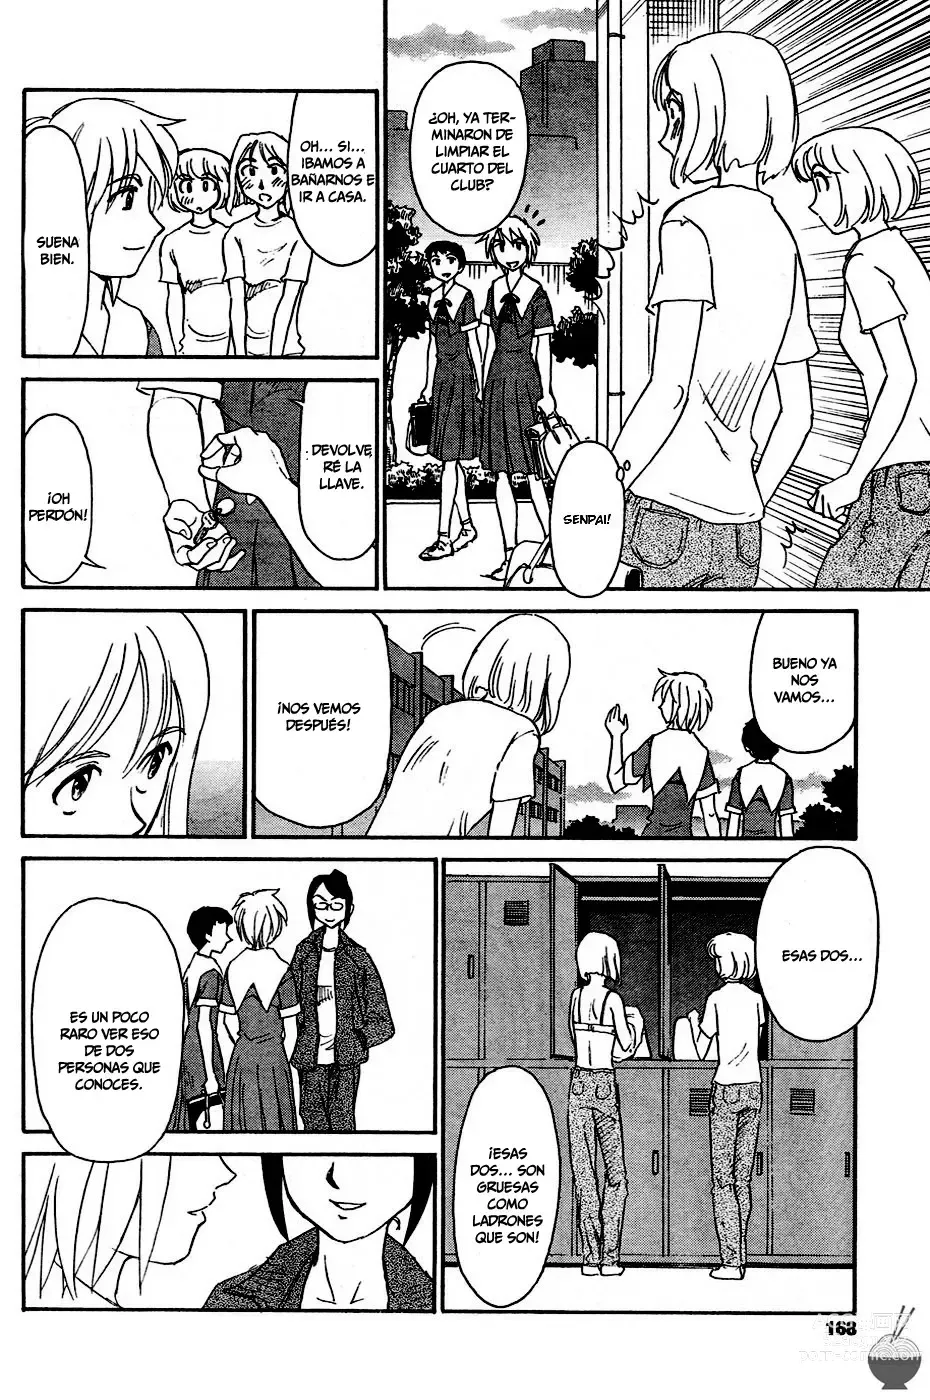 Page 222 of manga Hana no Iro - Colors of Flowers